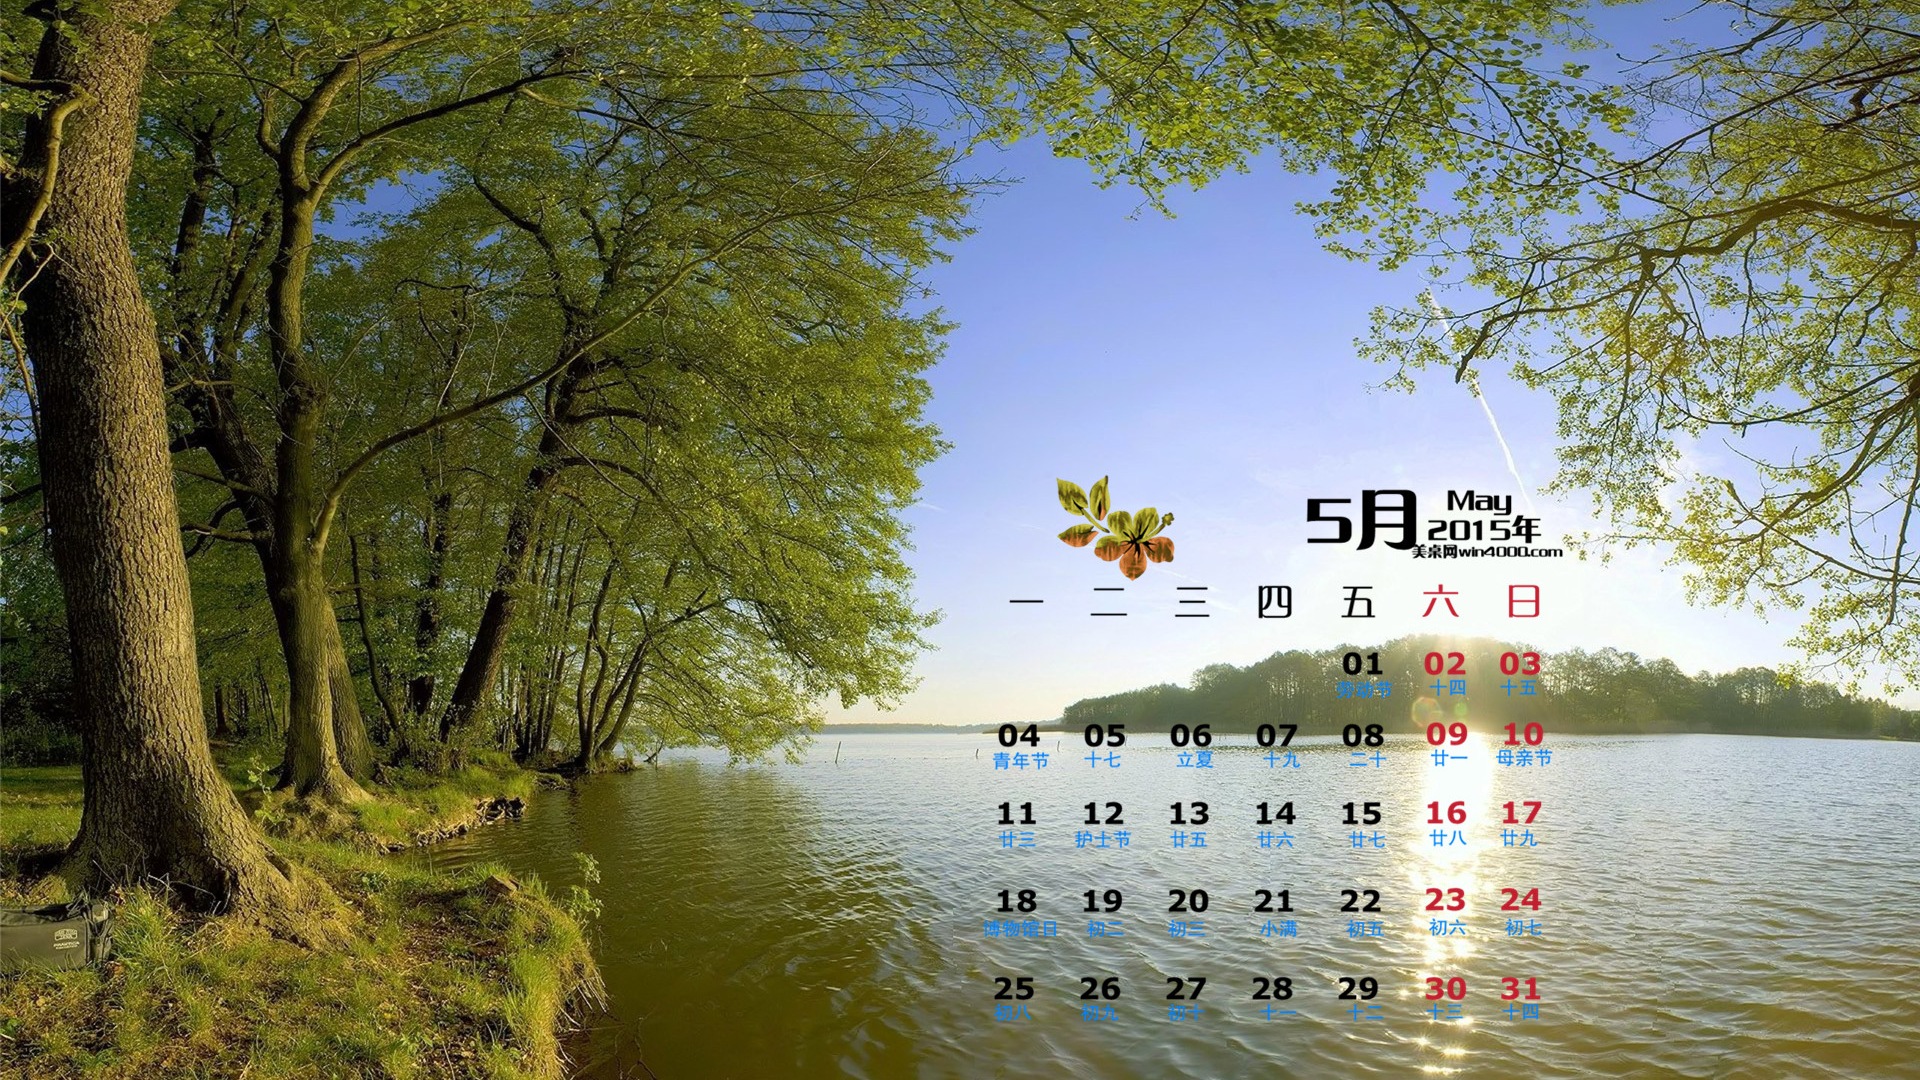 Mai 2015 calendar fond d'écran (1) #4 - 1920x1080